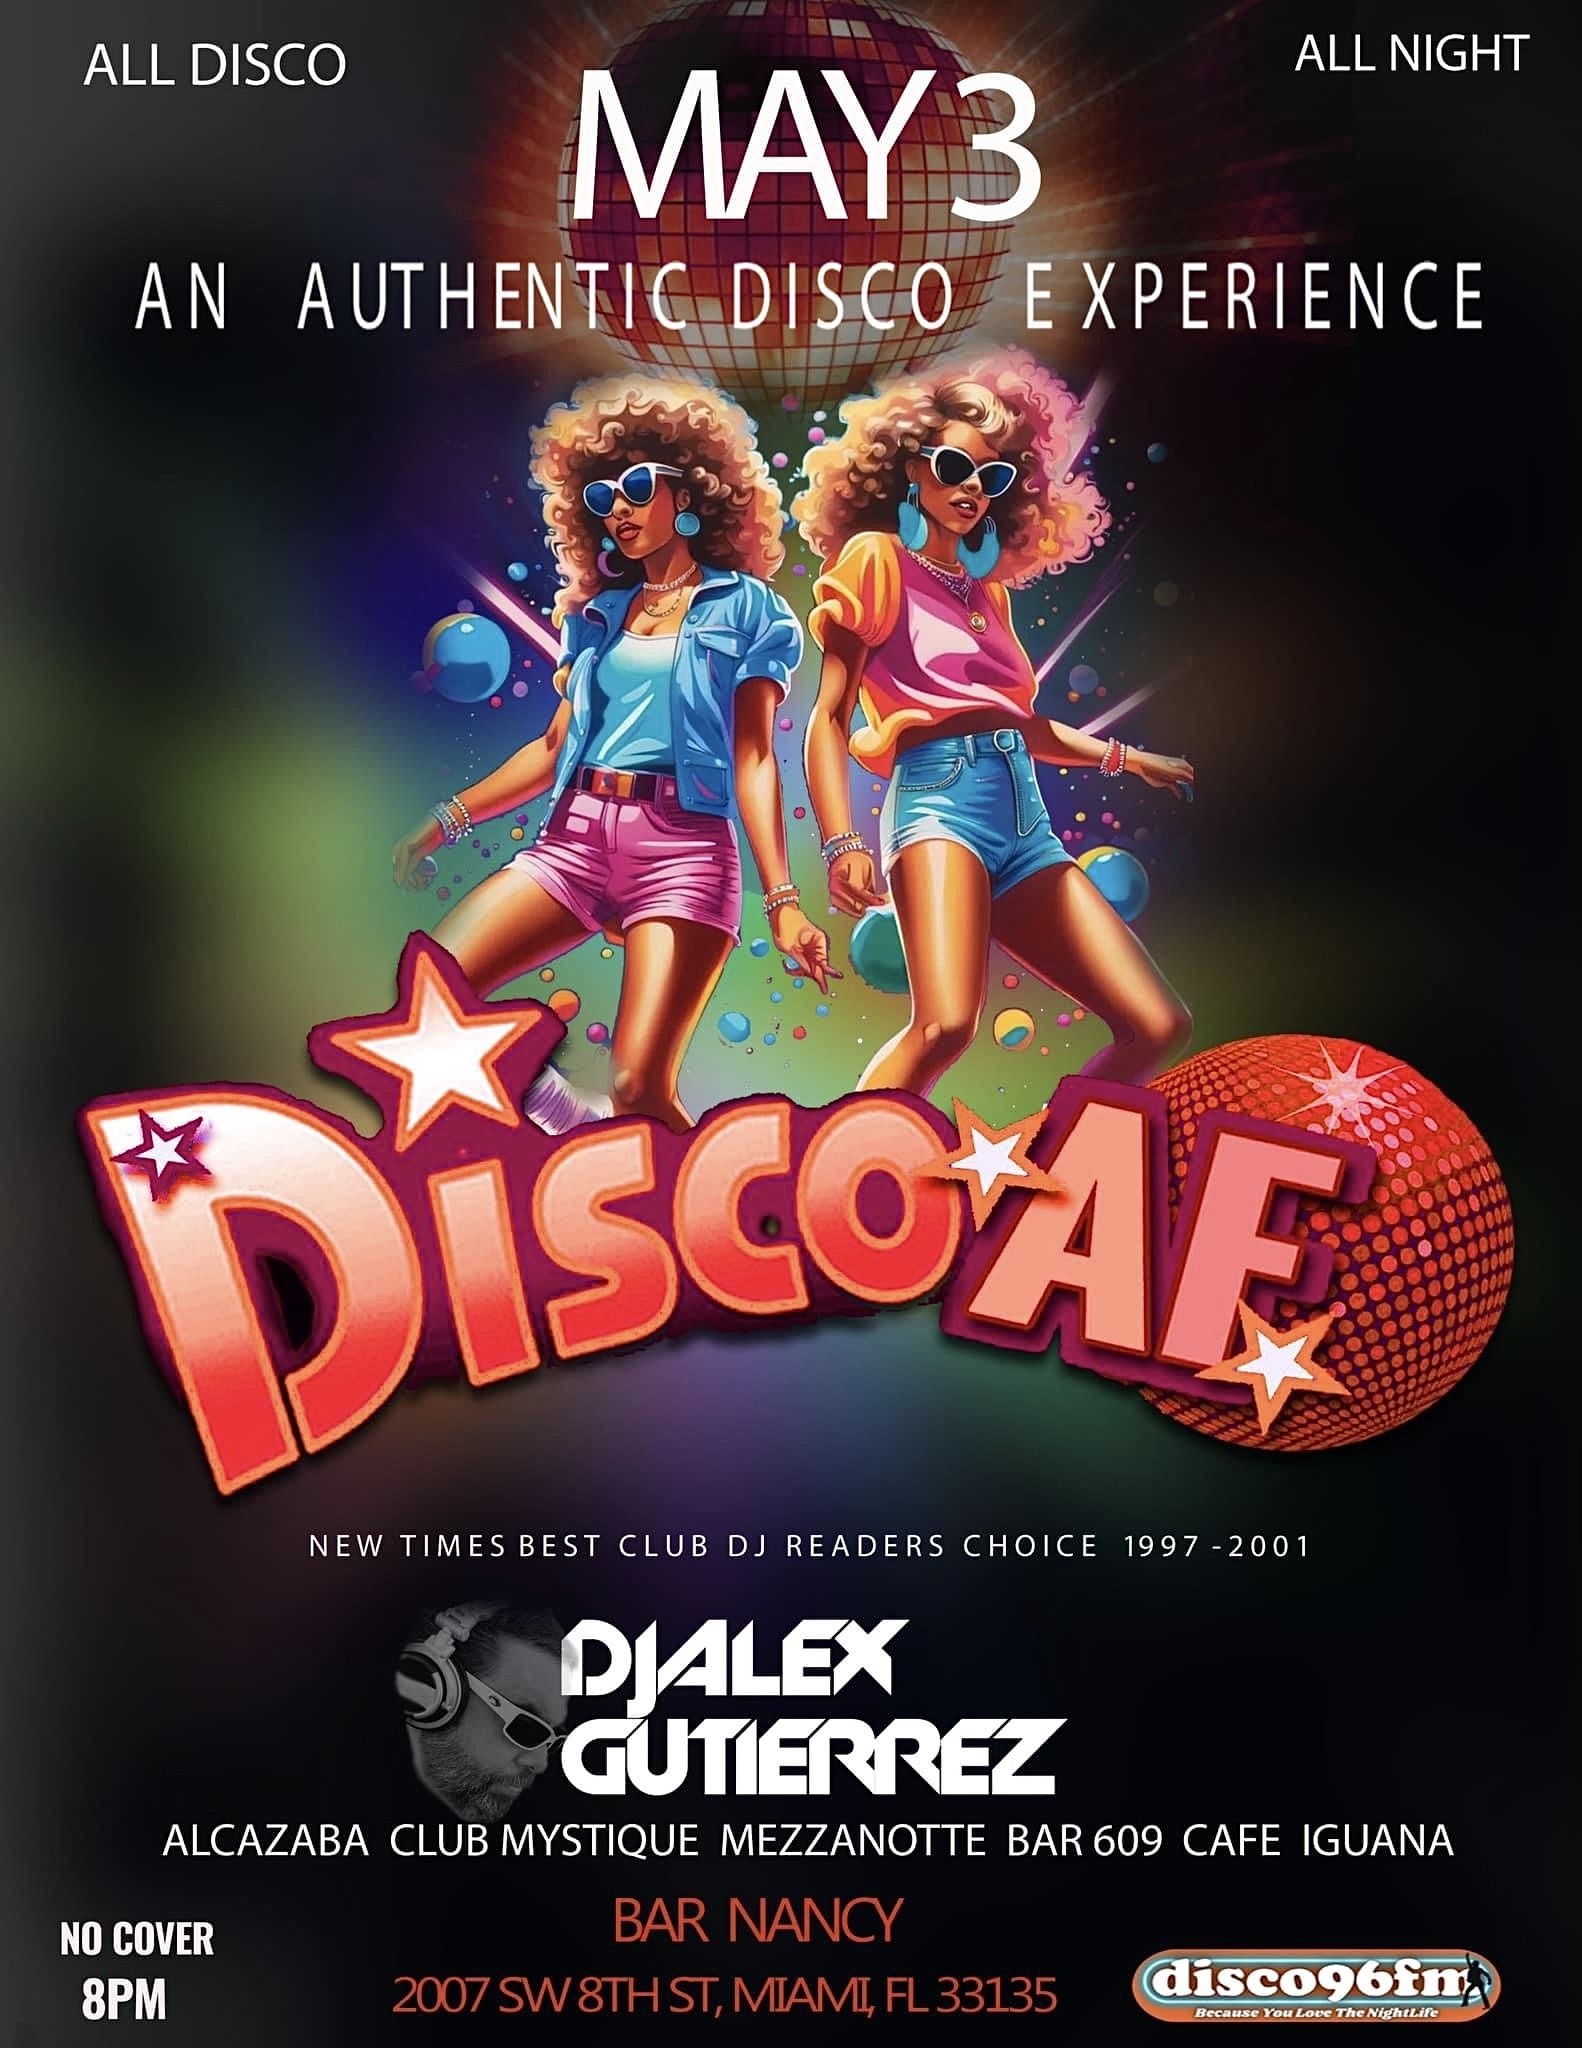 Disco AF at Bar Nancy - DJ ALEX GUTIERREZ